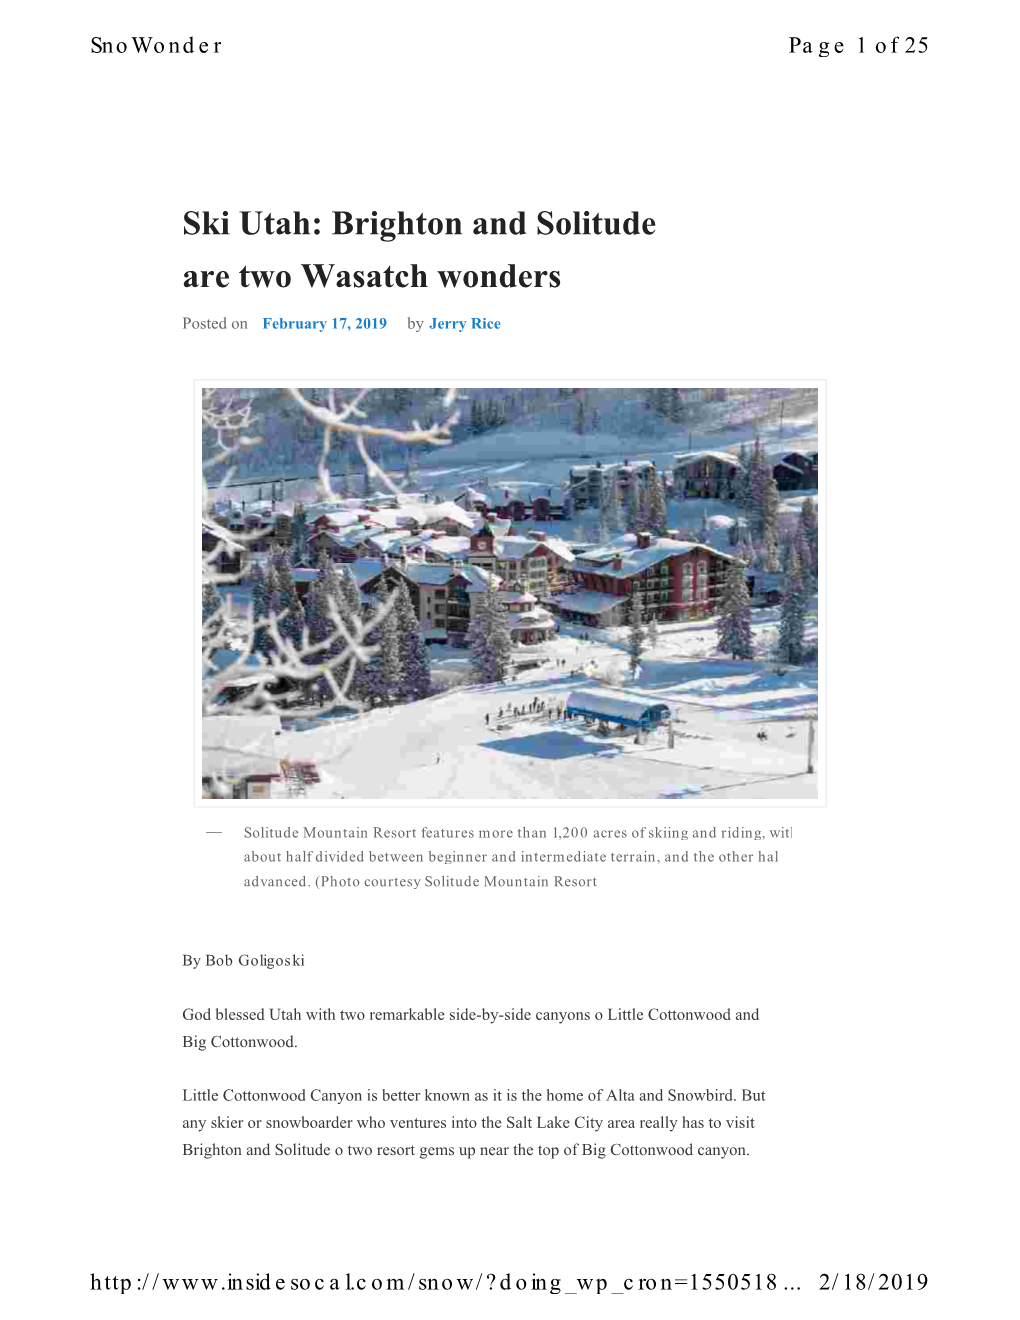 Ski Utah: Brighton and Solitude Are Two Wasatch Wonders